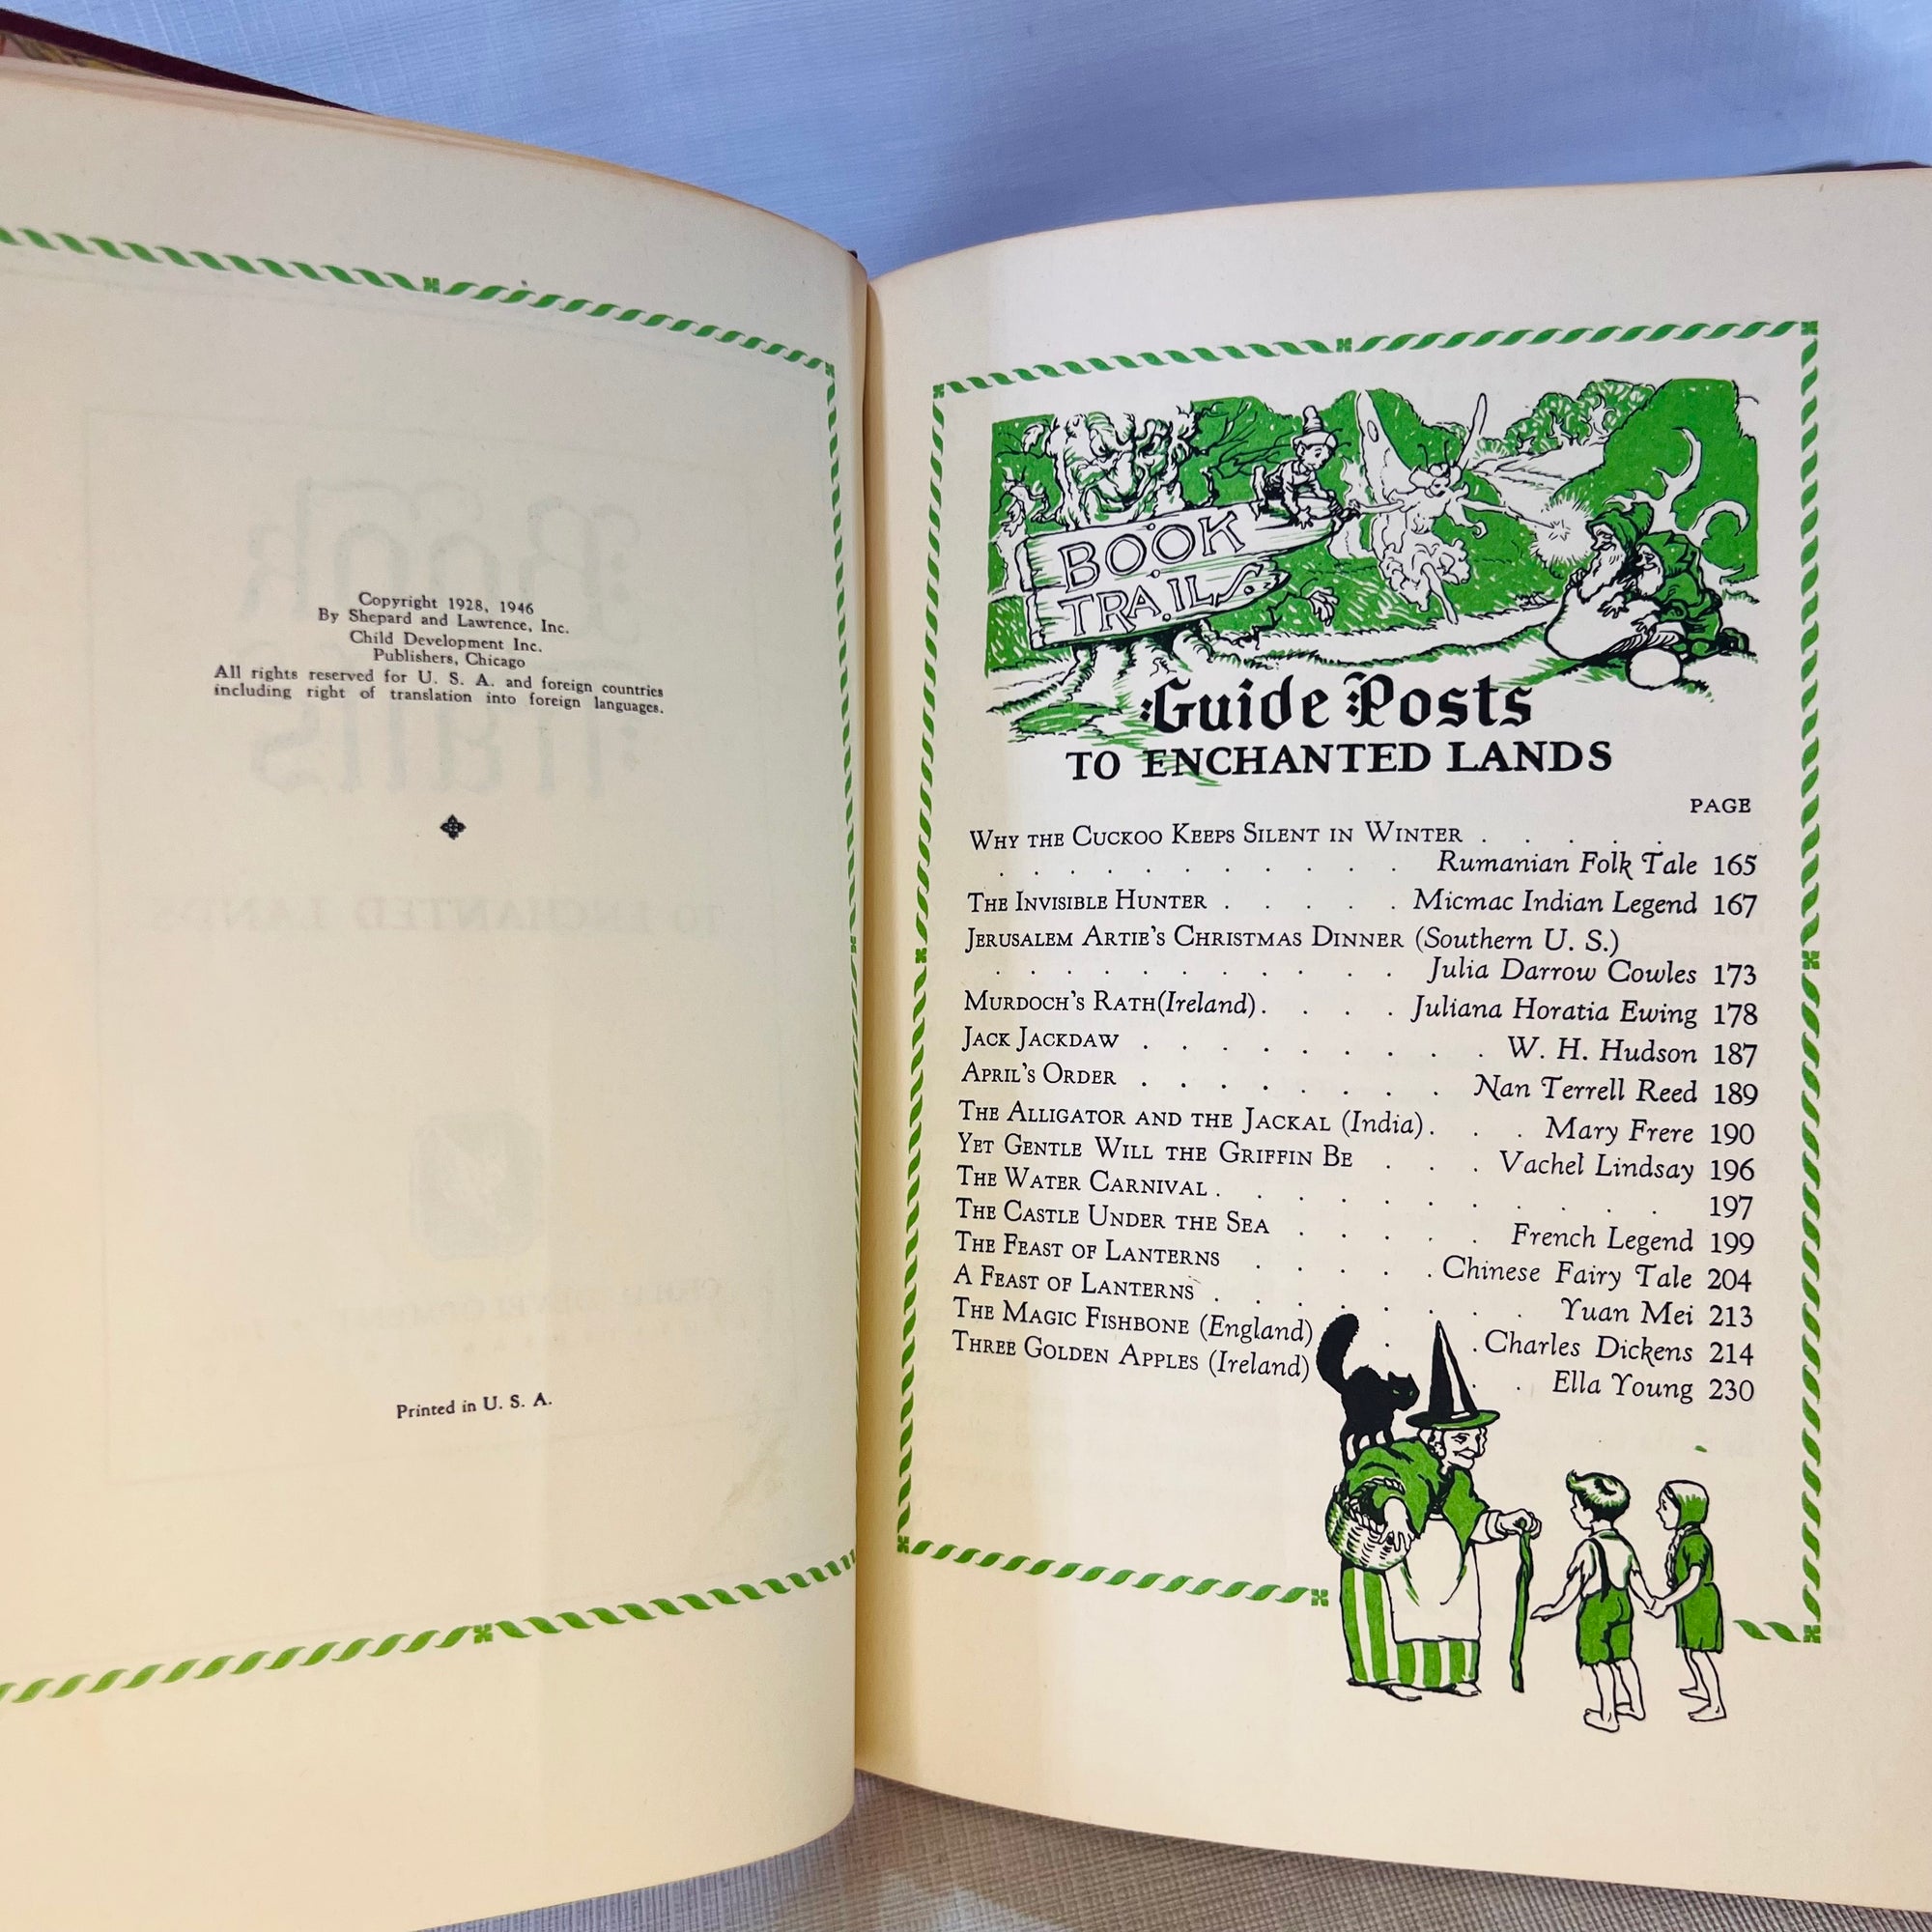 Book Trails Eight Volume Set 1946 Child Development Inc